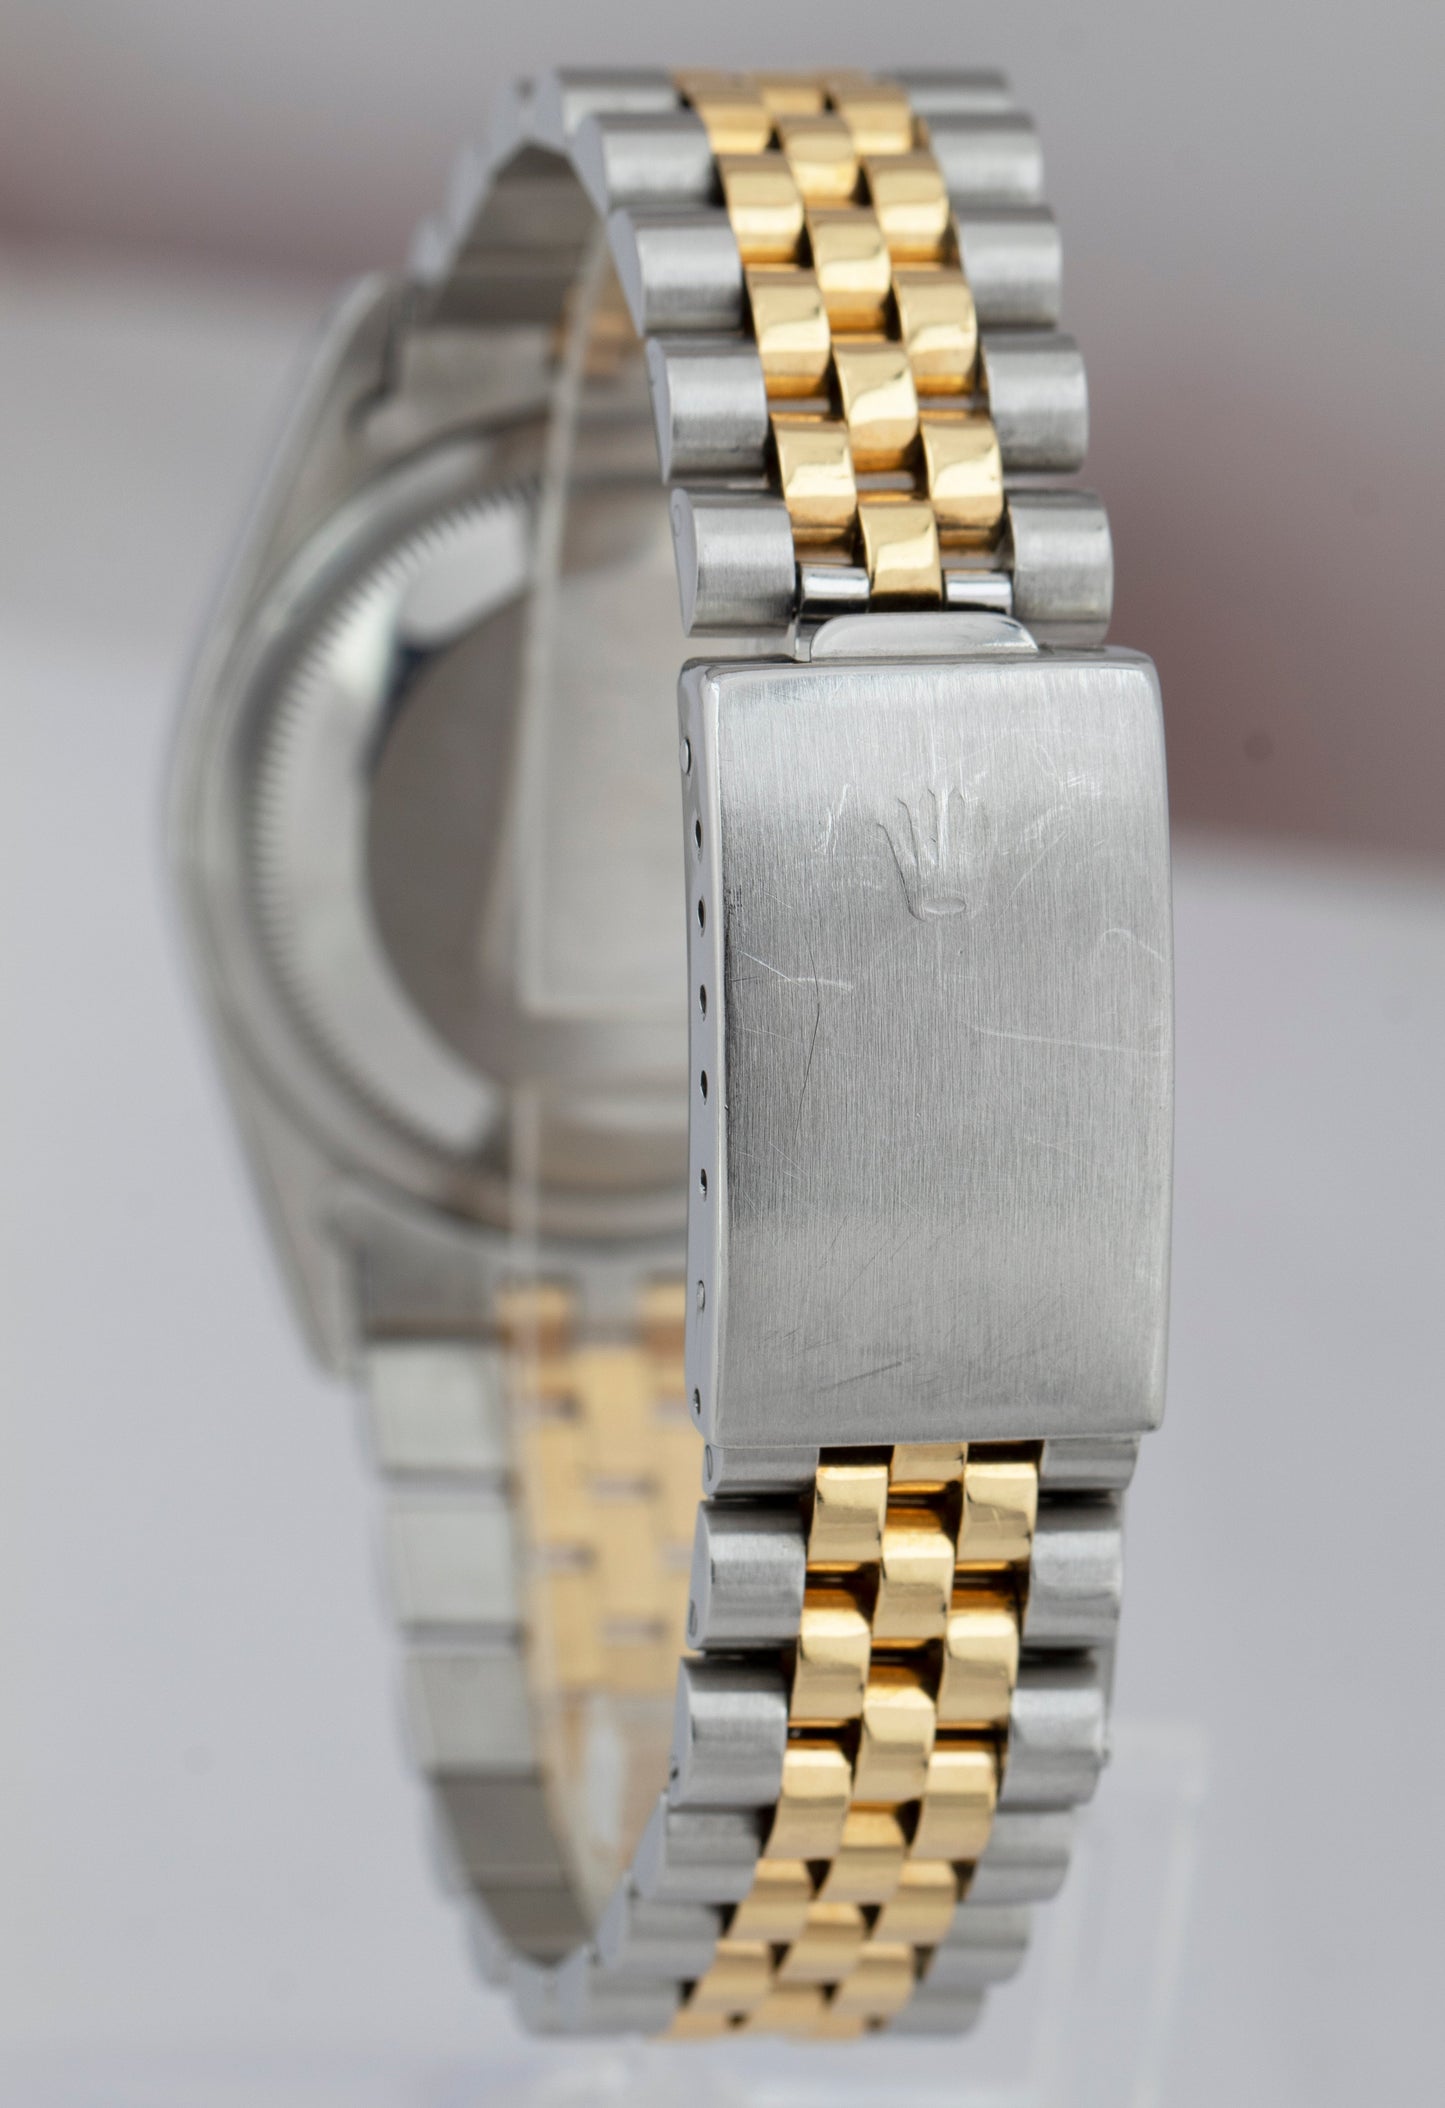 RARE Rolex DateJust 36mm BLUE ARABIC JUBILEE 18K Yellow Gold Steel Watch 16233